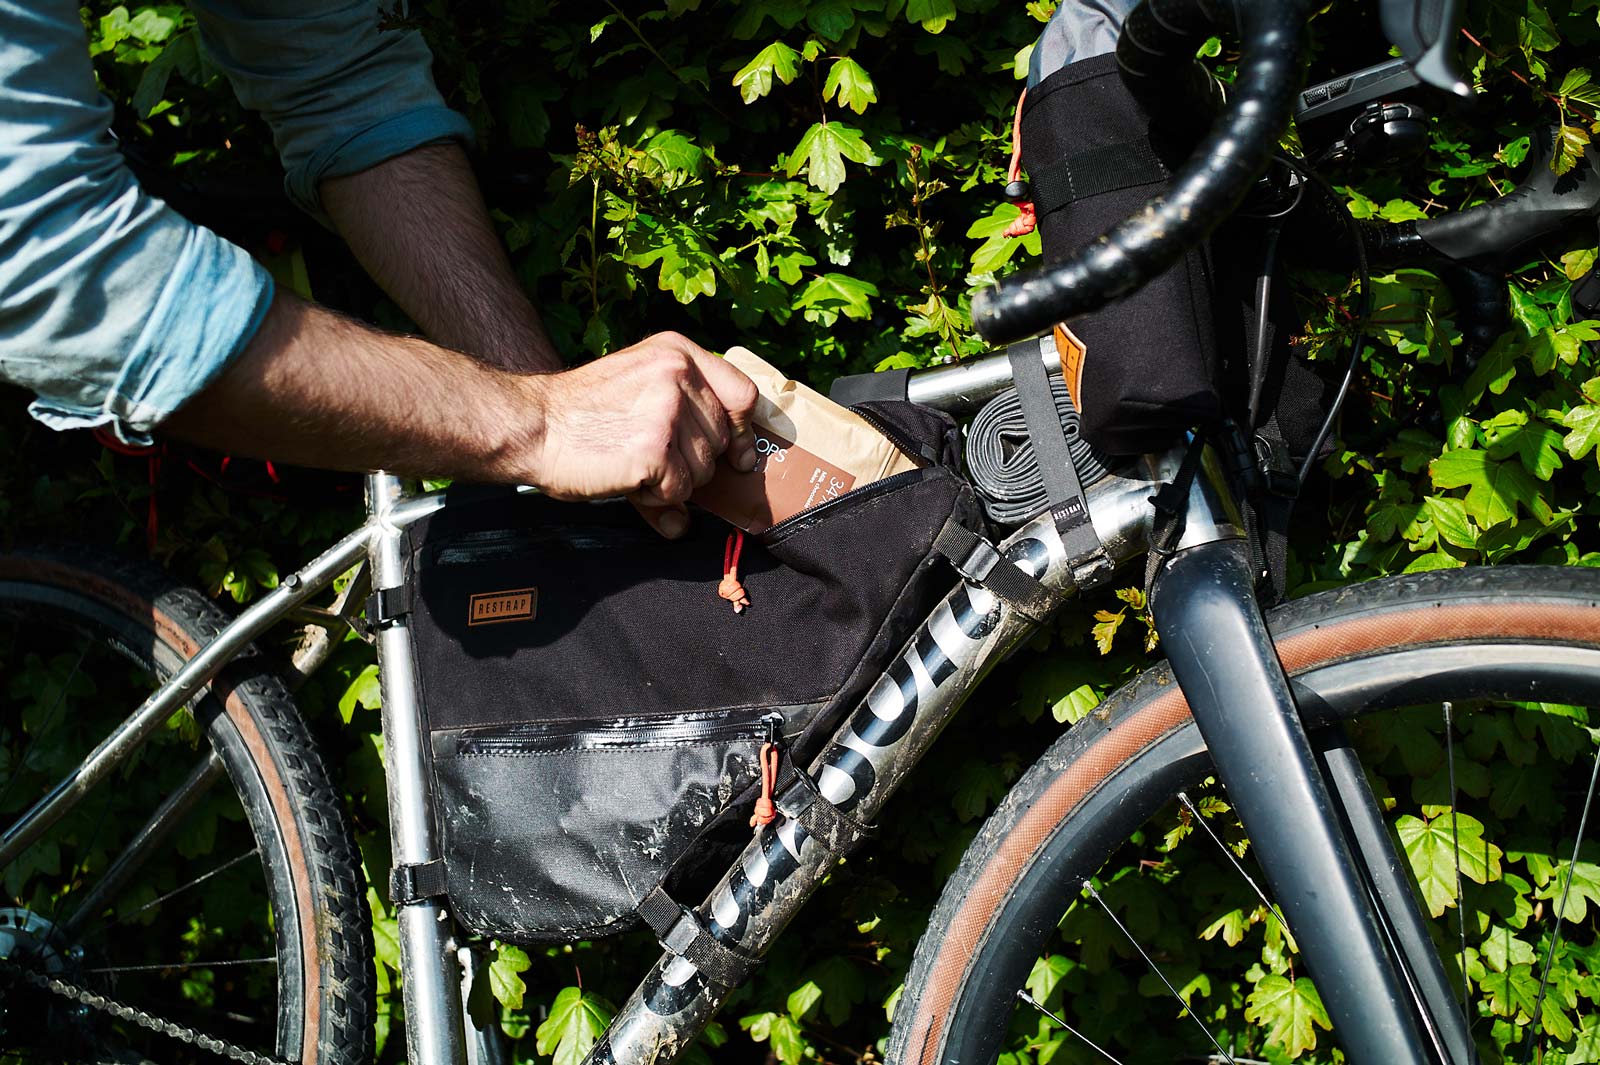 restrap full frame bags for bikepacking 6, 7.5 and 9 litre options